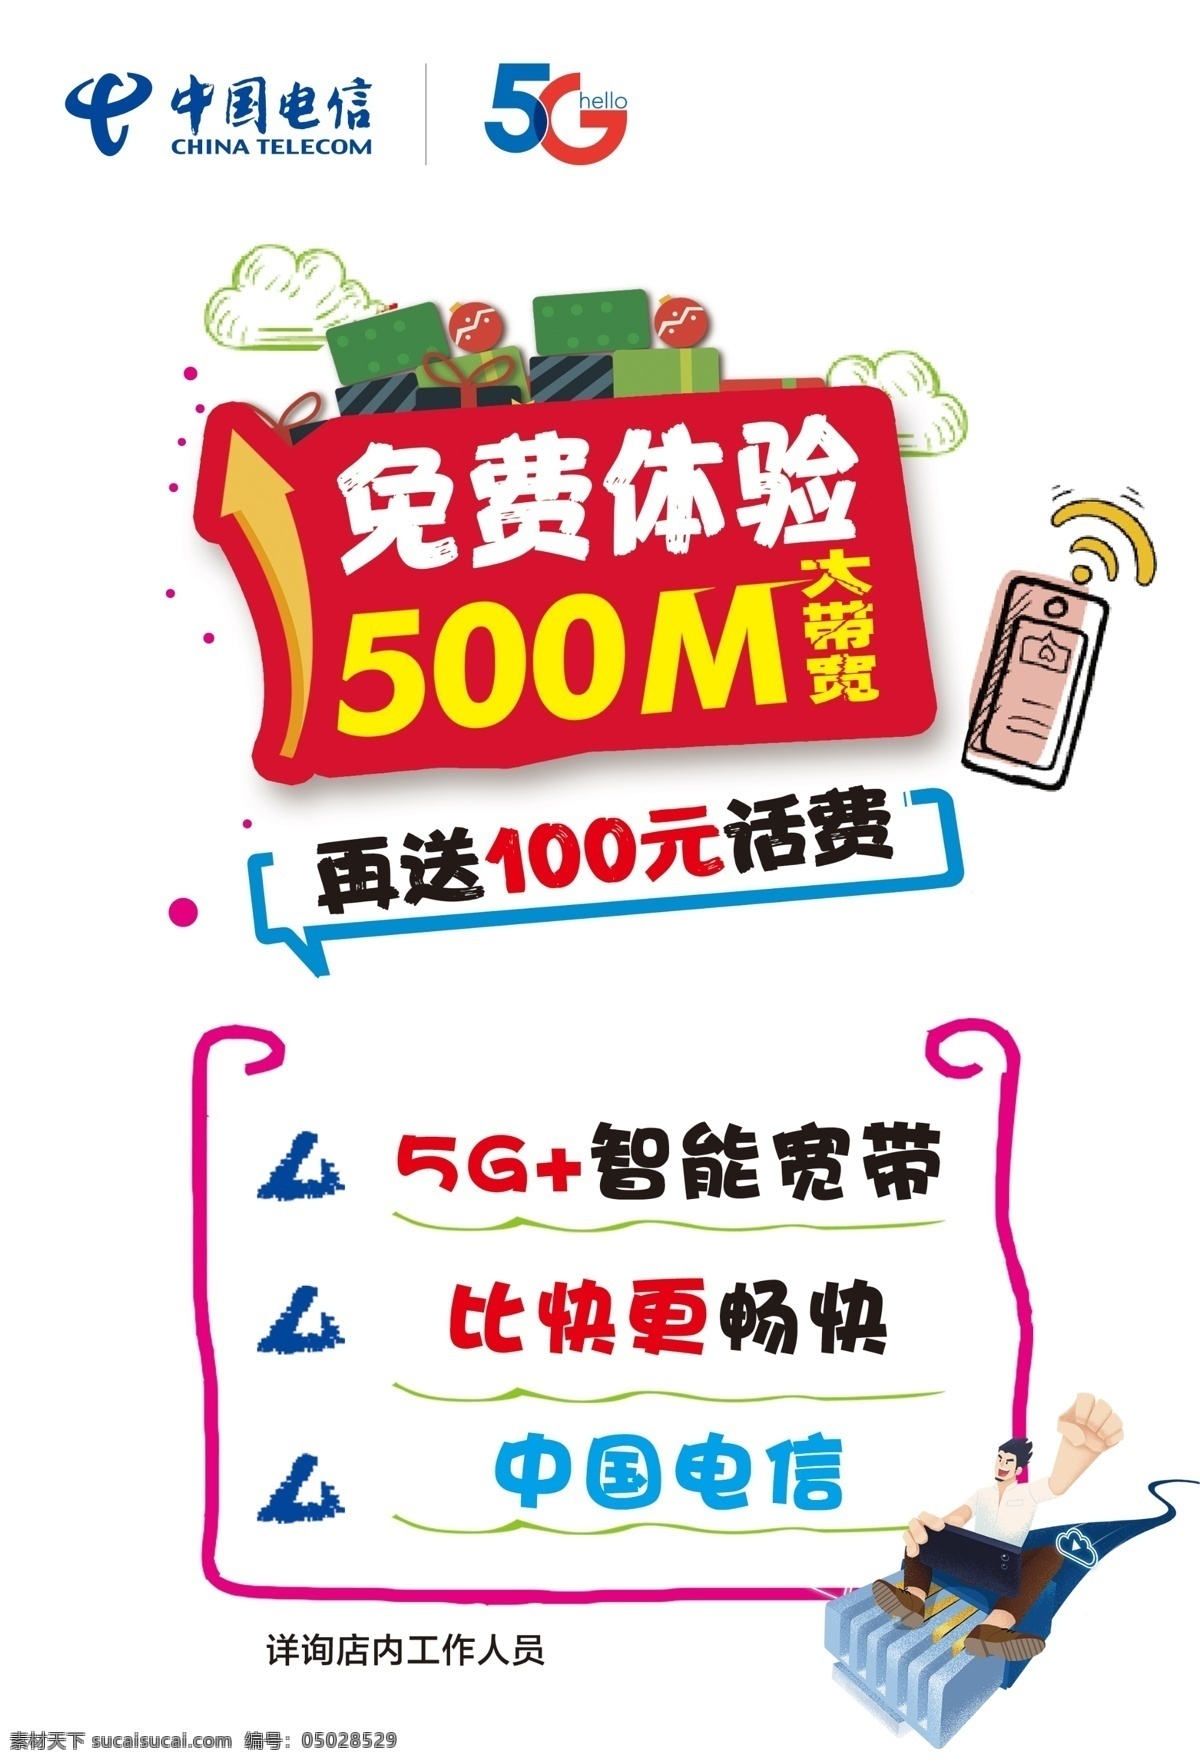 500m宽带 免费体验宽带 电信智能宽带 五百兆宽带 5glogo 中国电信 logo